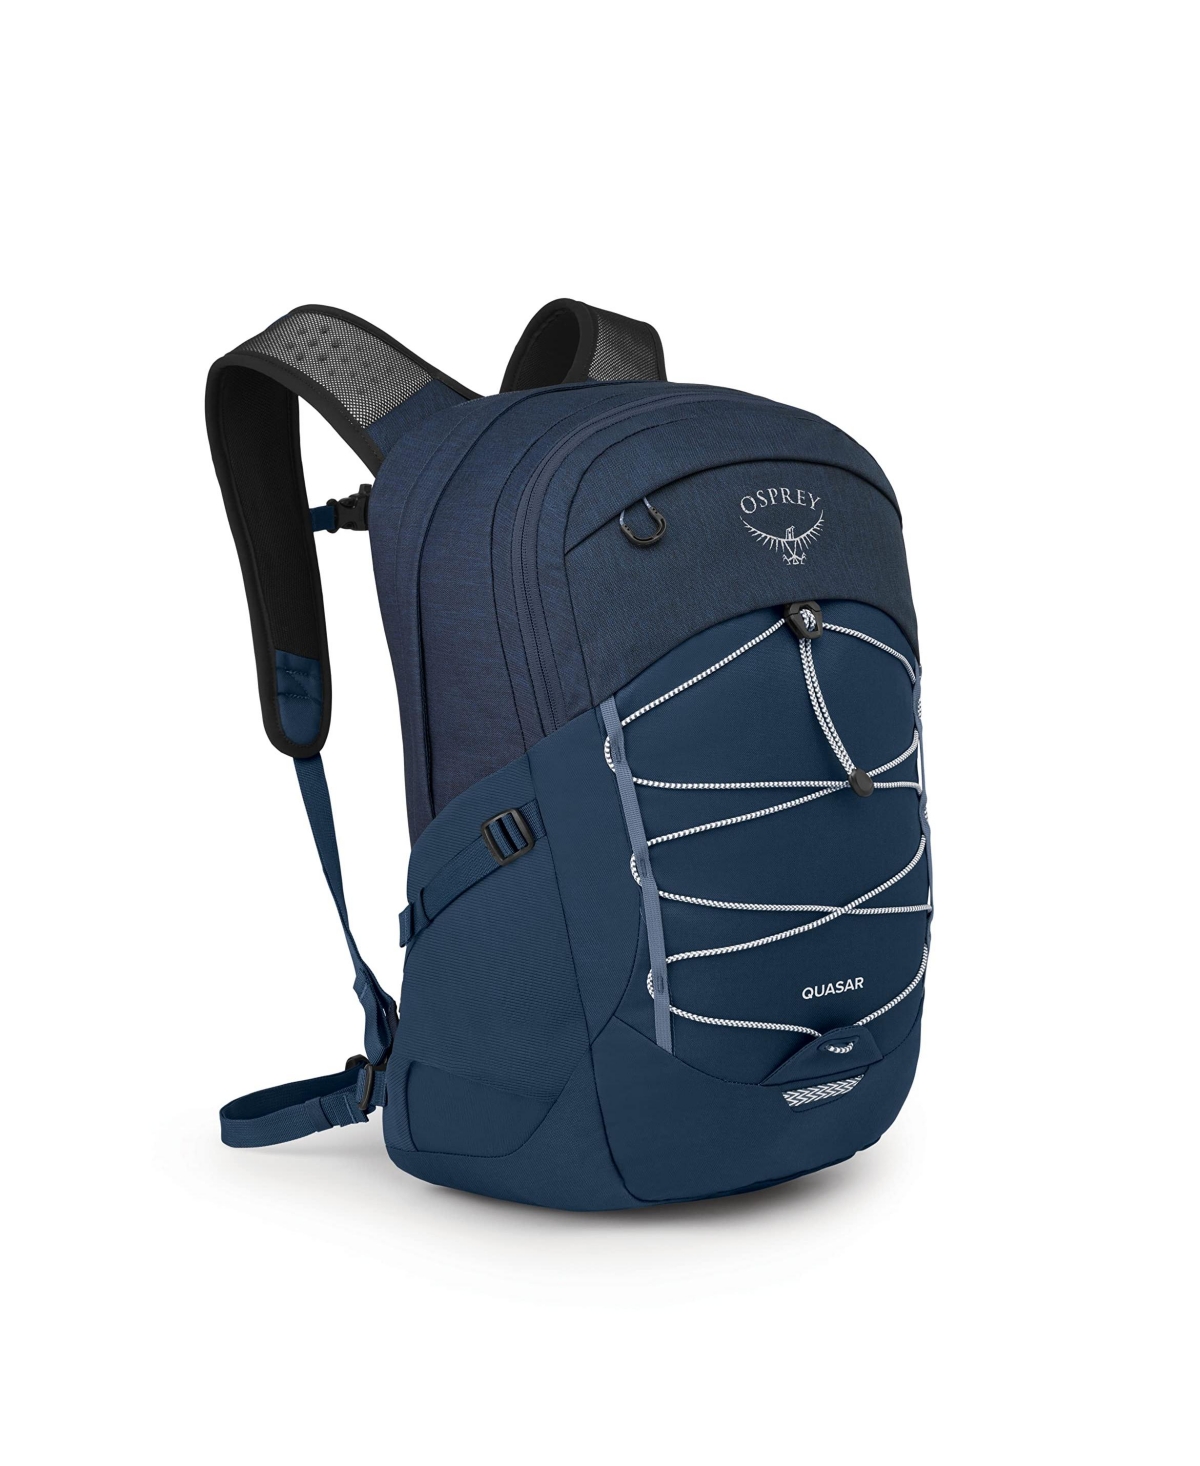 Quasar Men's Laptop Backpack - Atlas blue